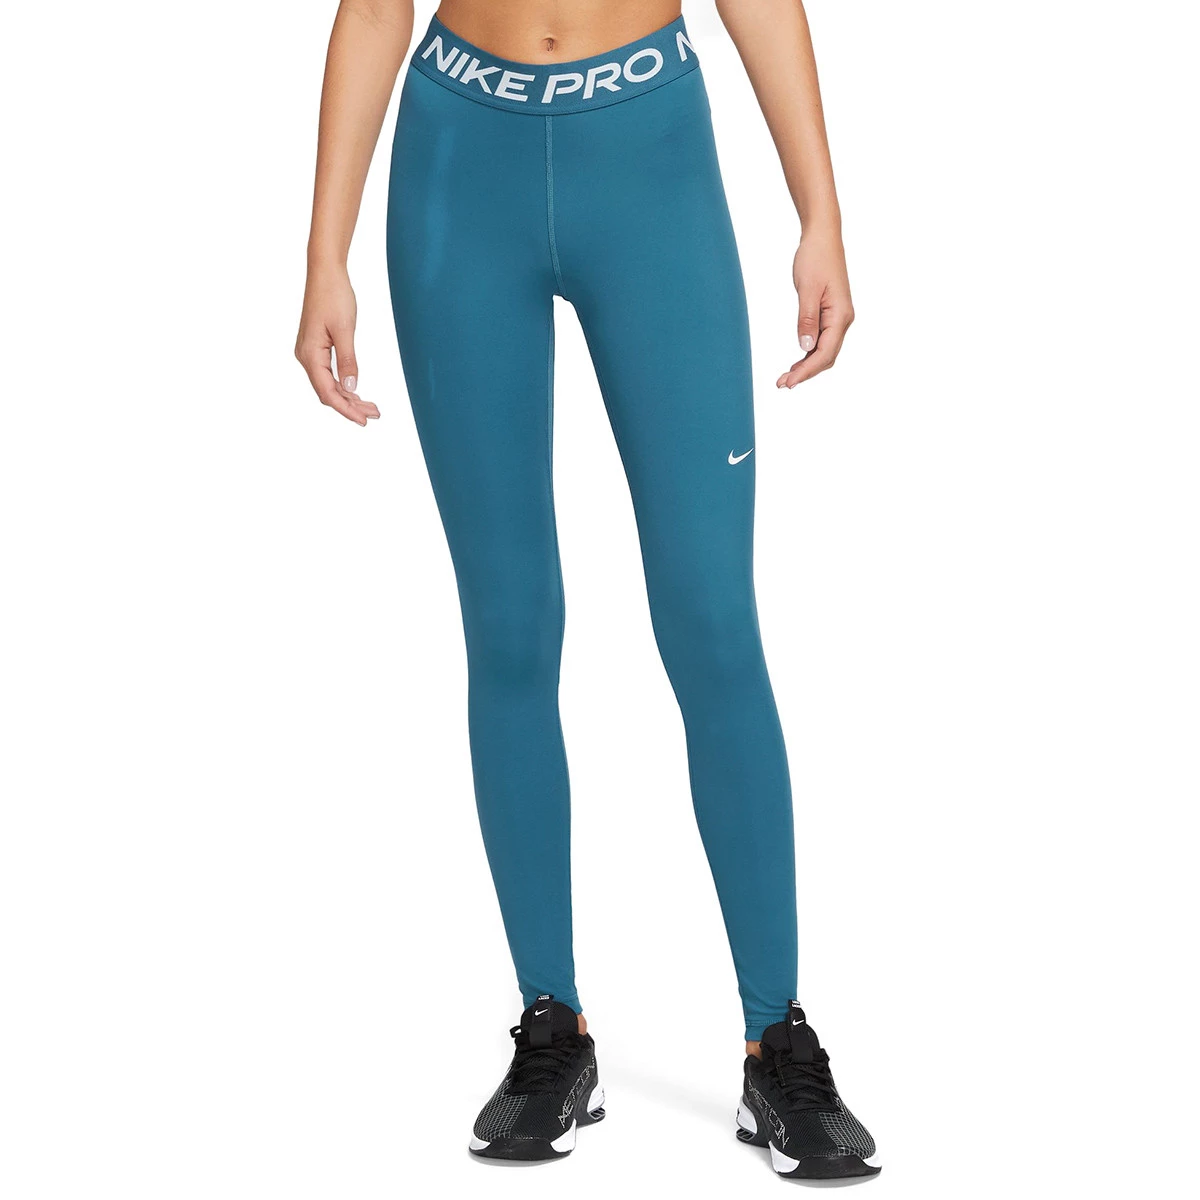 Women's leggings NOX Malla Mujer Pro W - azul/marino, Tennis Zone